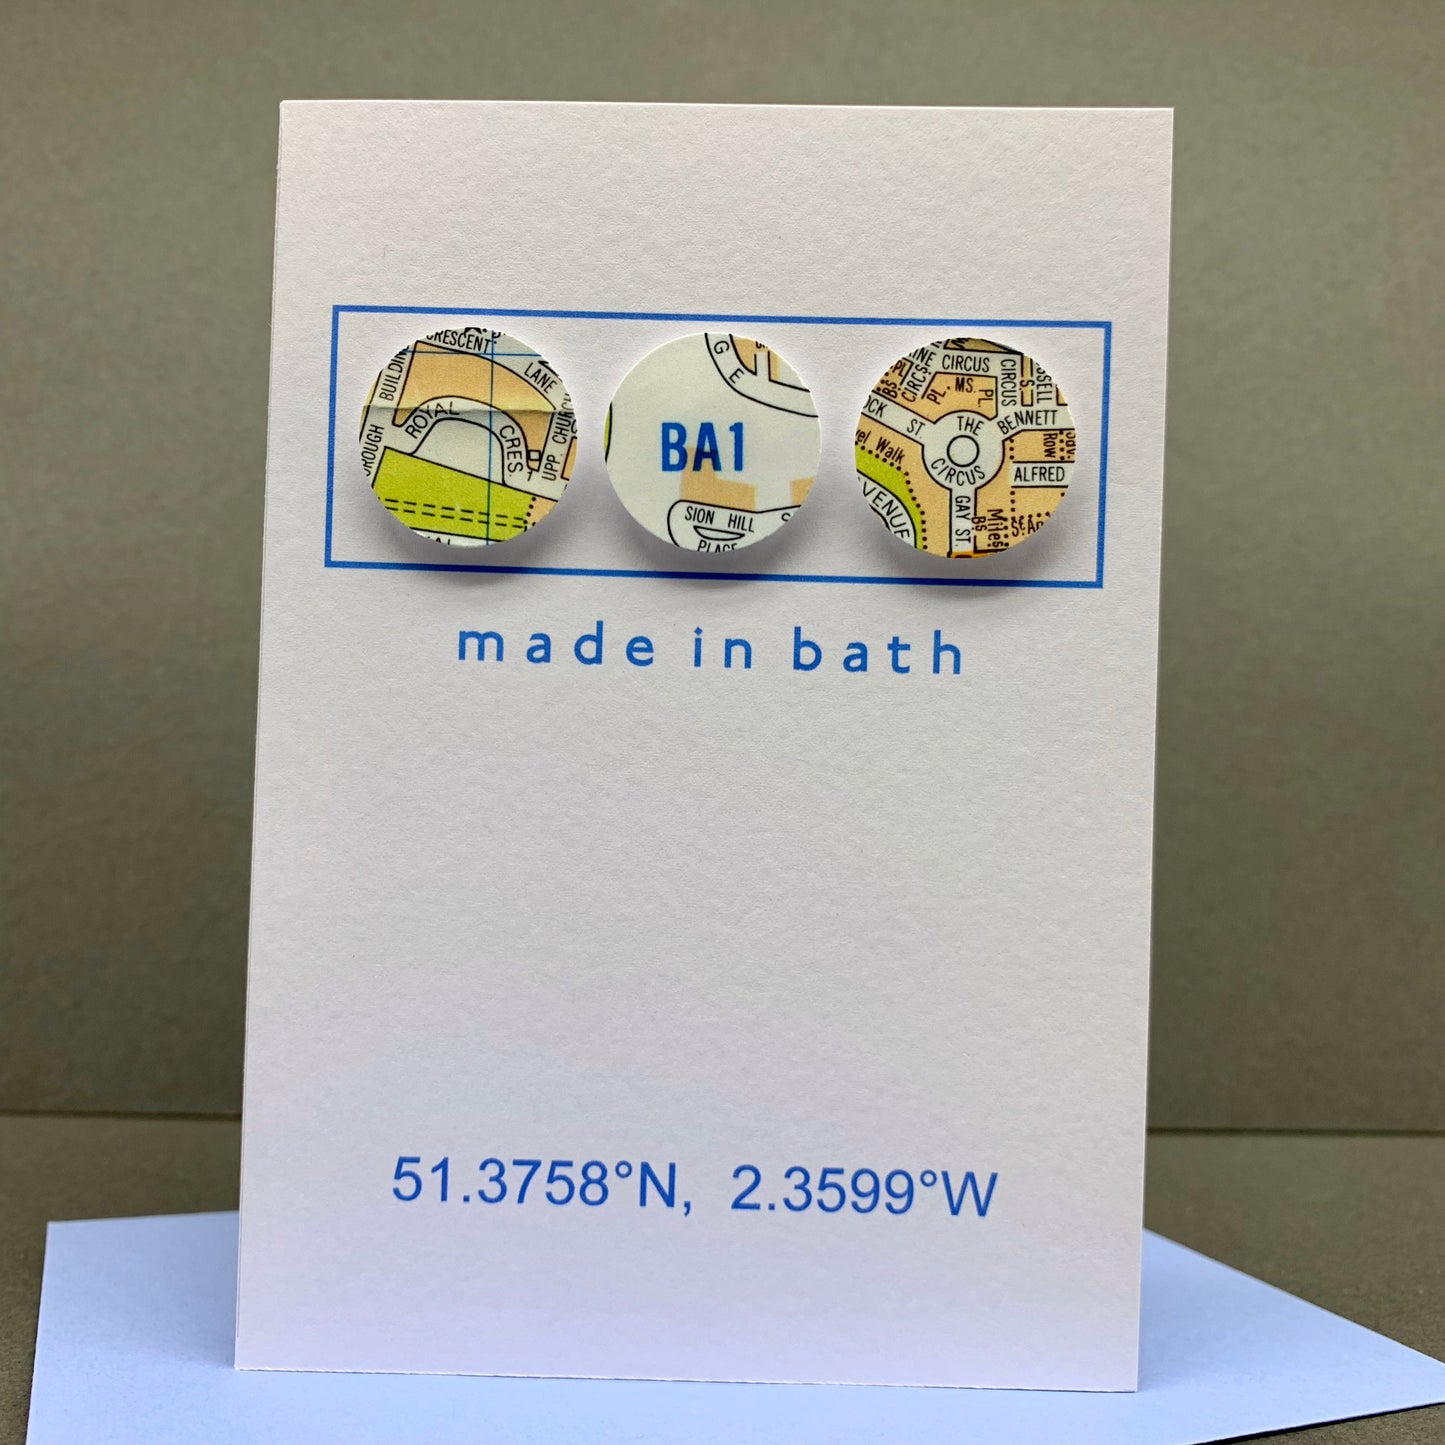 Made in Bath (Co-ordinates)